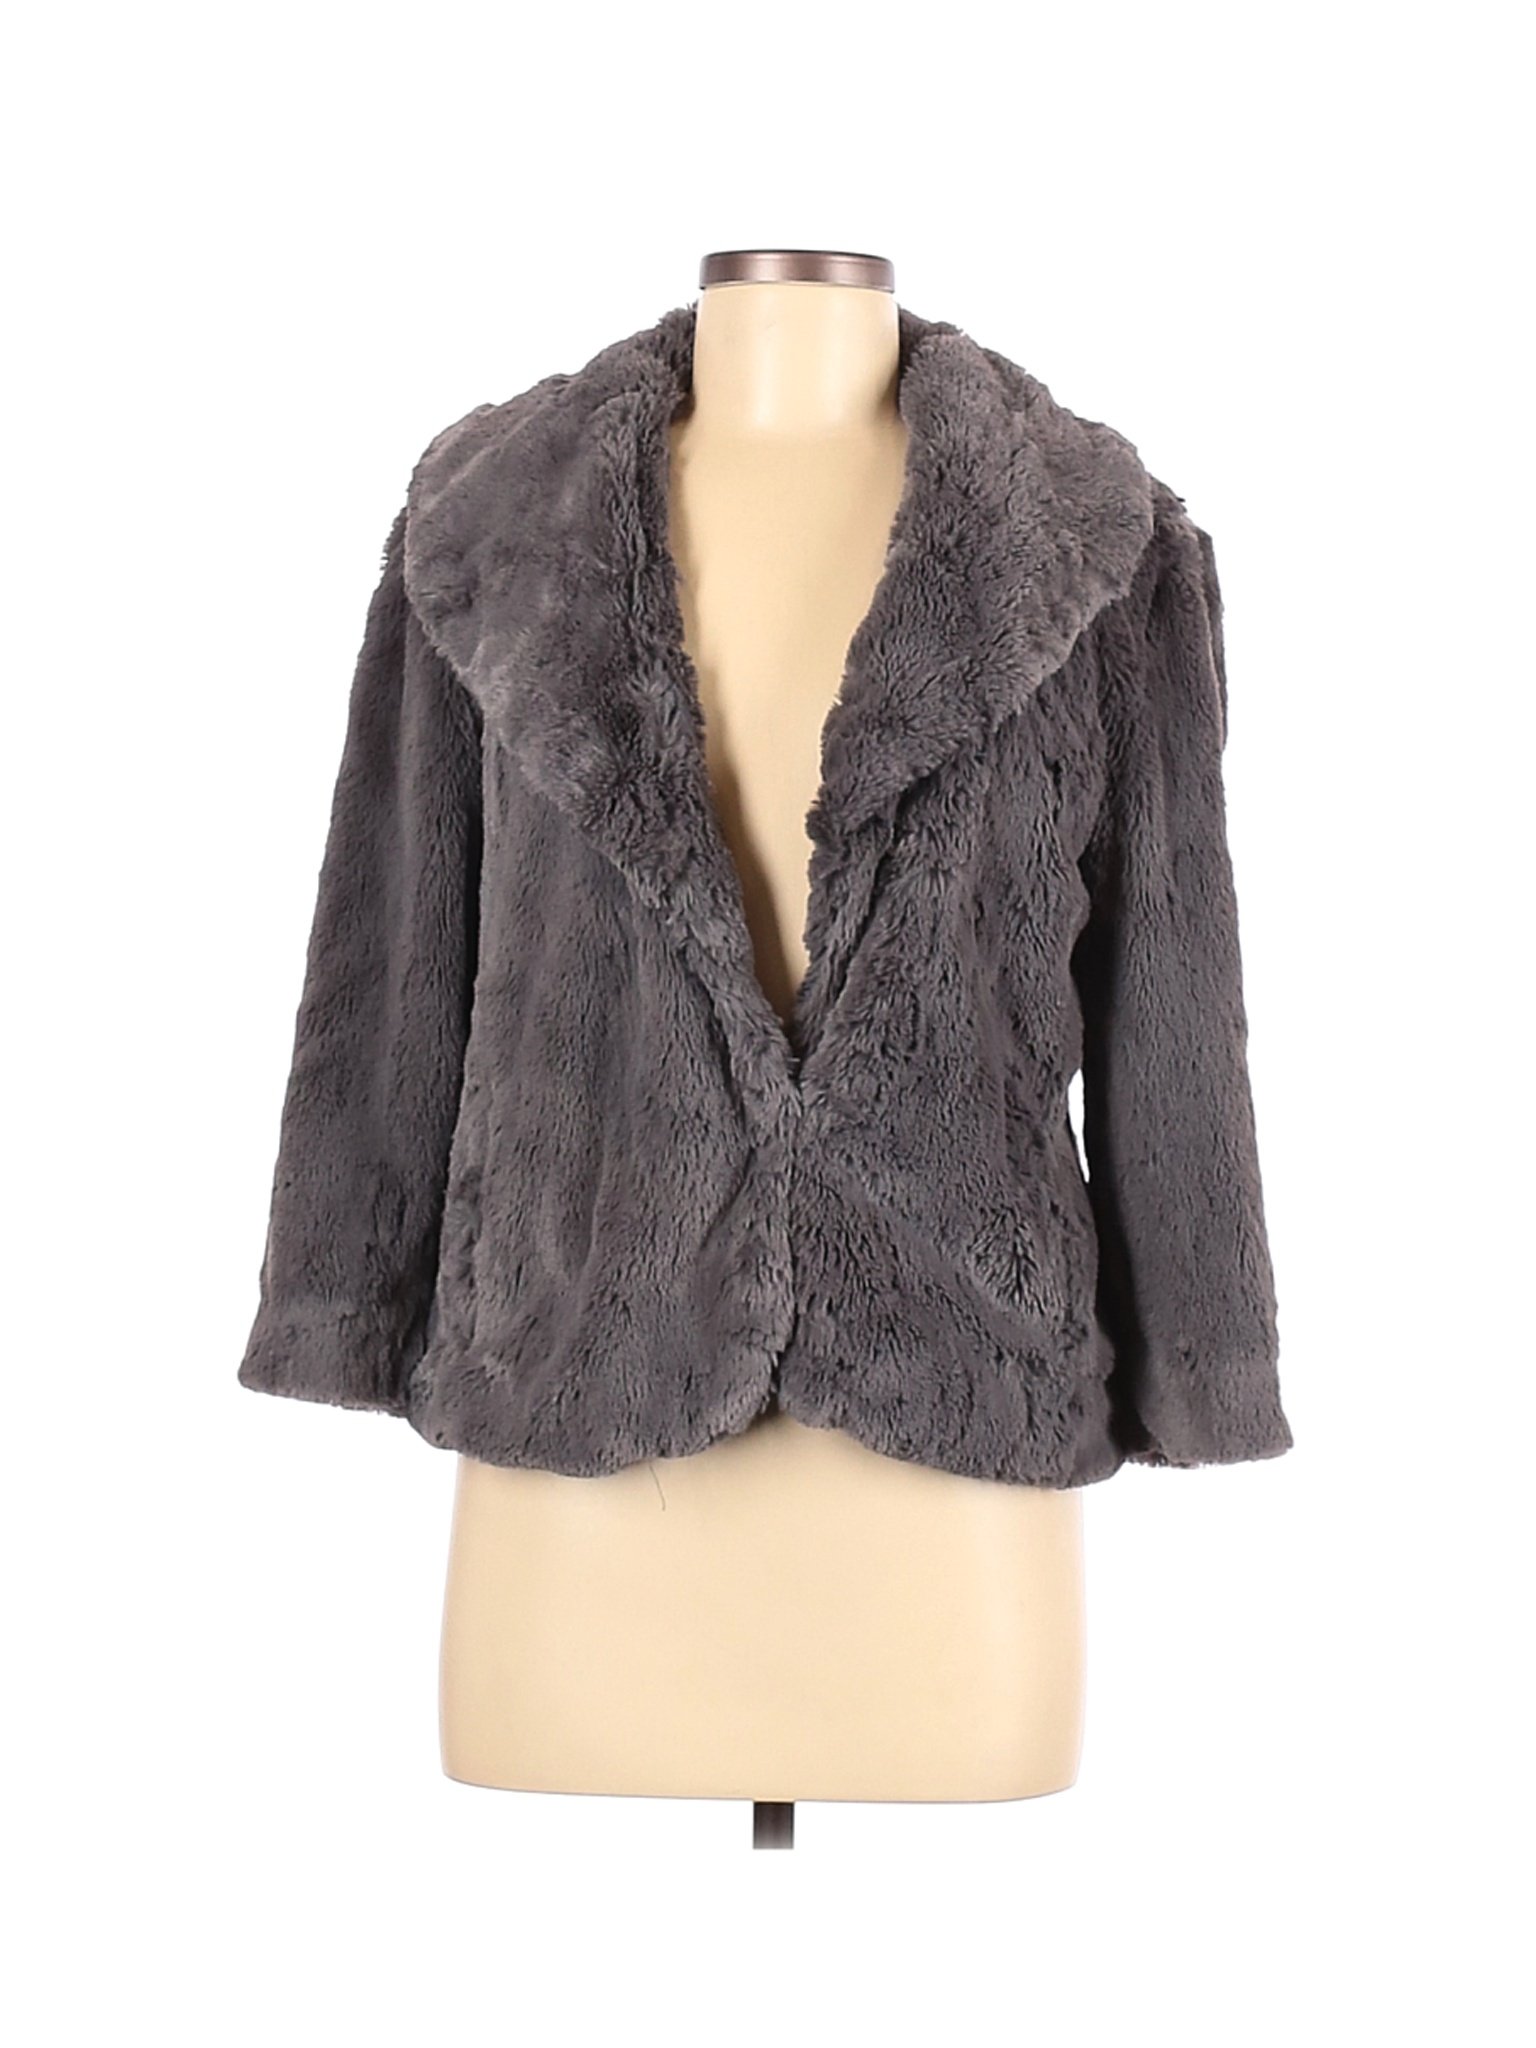 Dolce Cabo Women Gray Faux Fur Jacket M | eBay